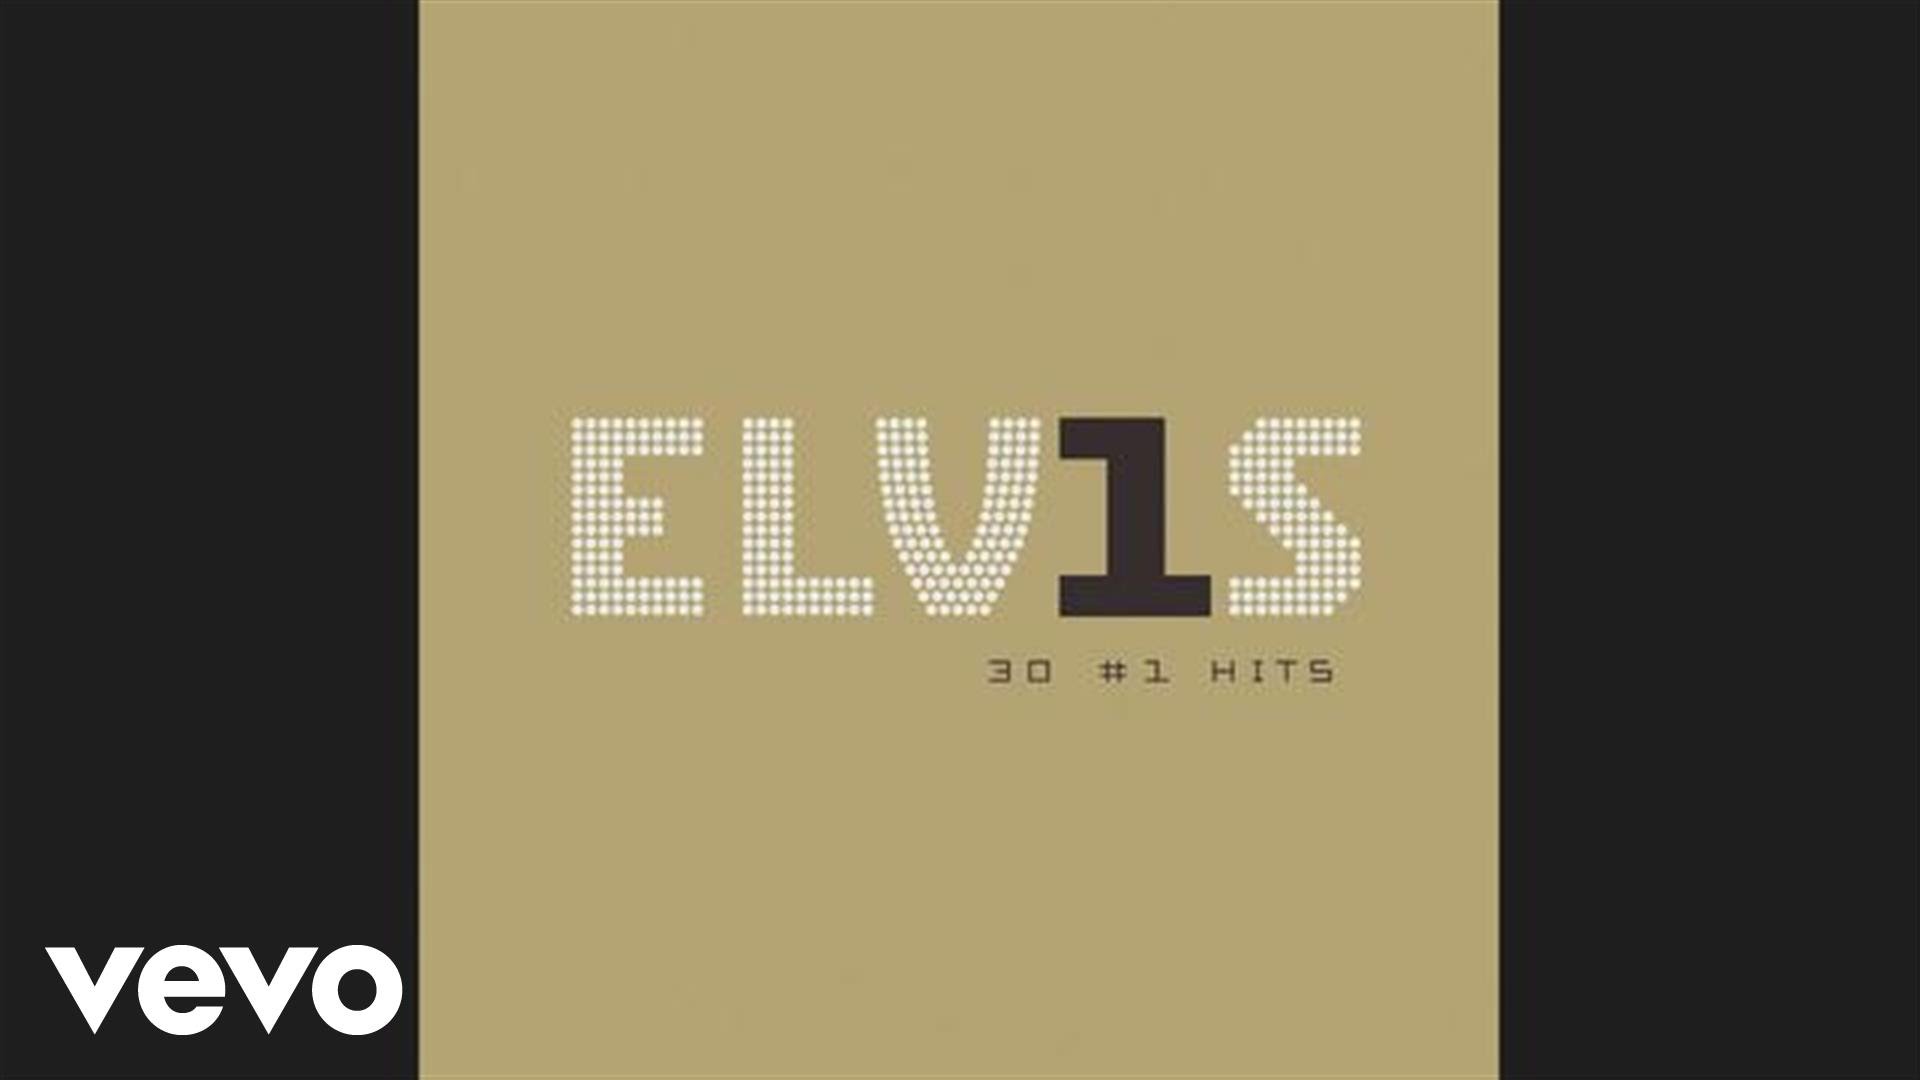 Elvis Presley - Stuck on you